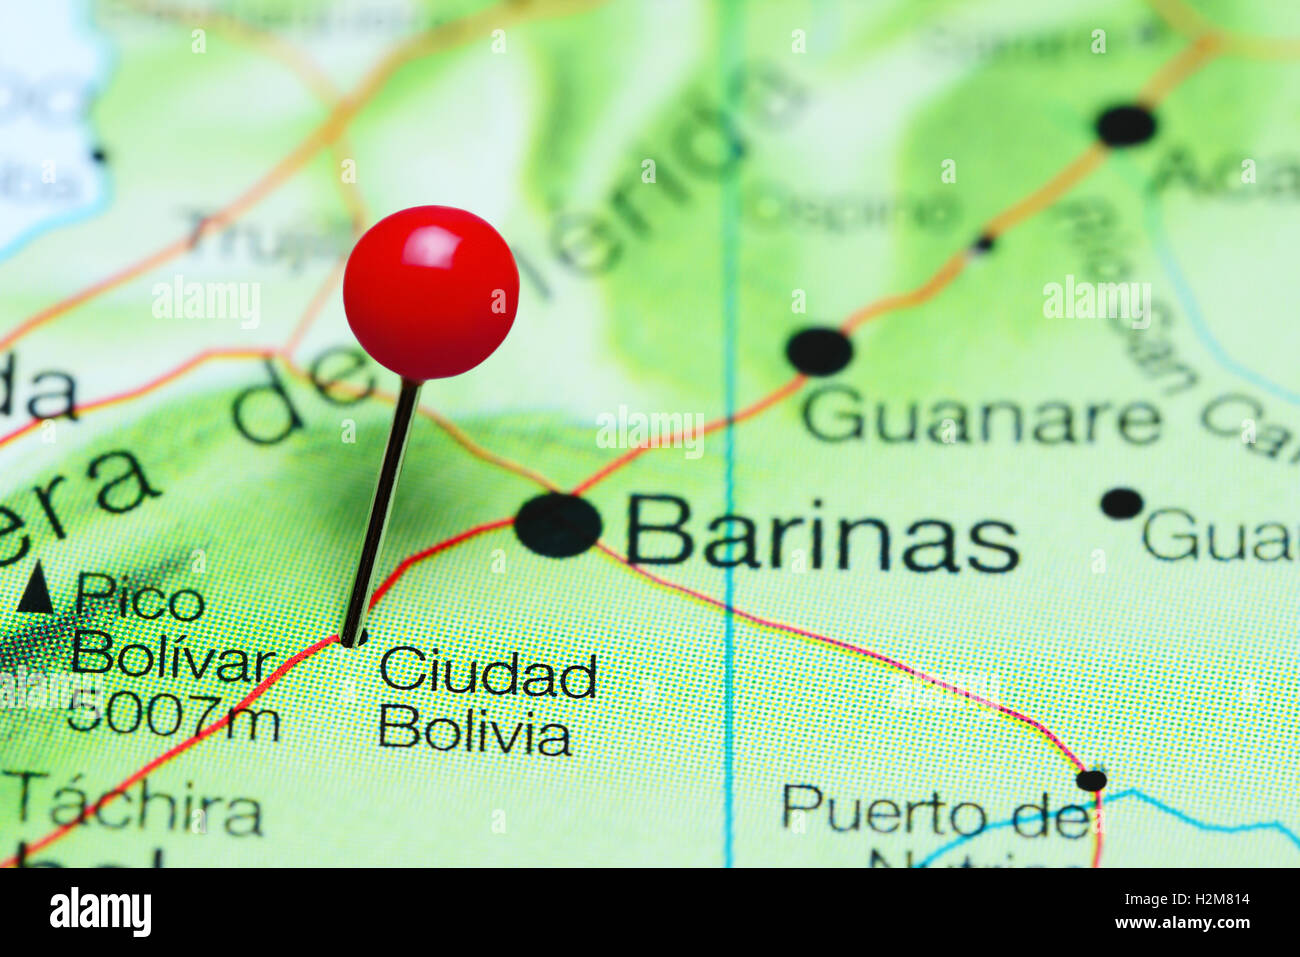 Ciudad Bolivia pinned on a map of Venezuela Stock Photo